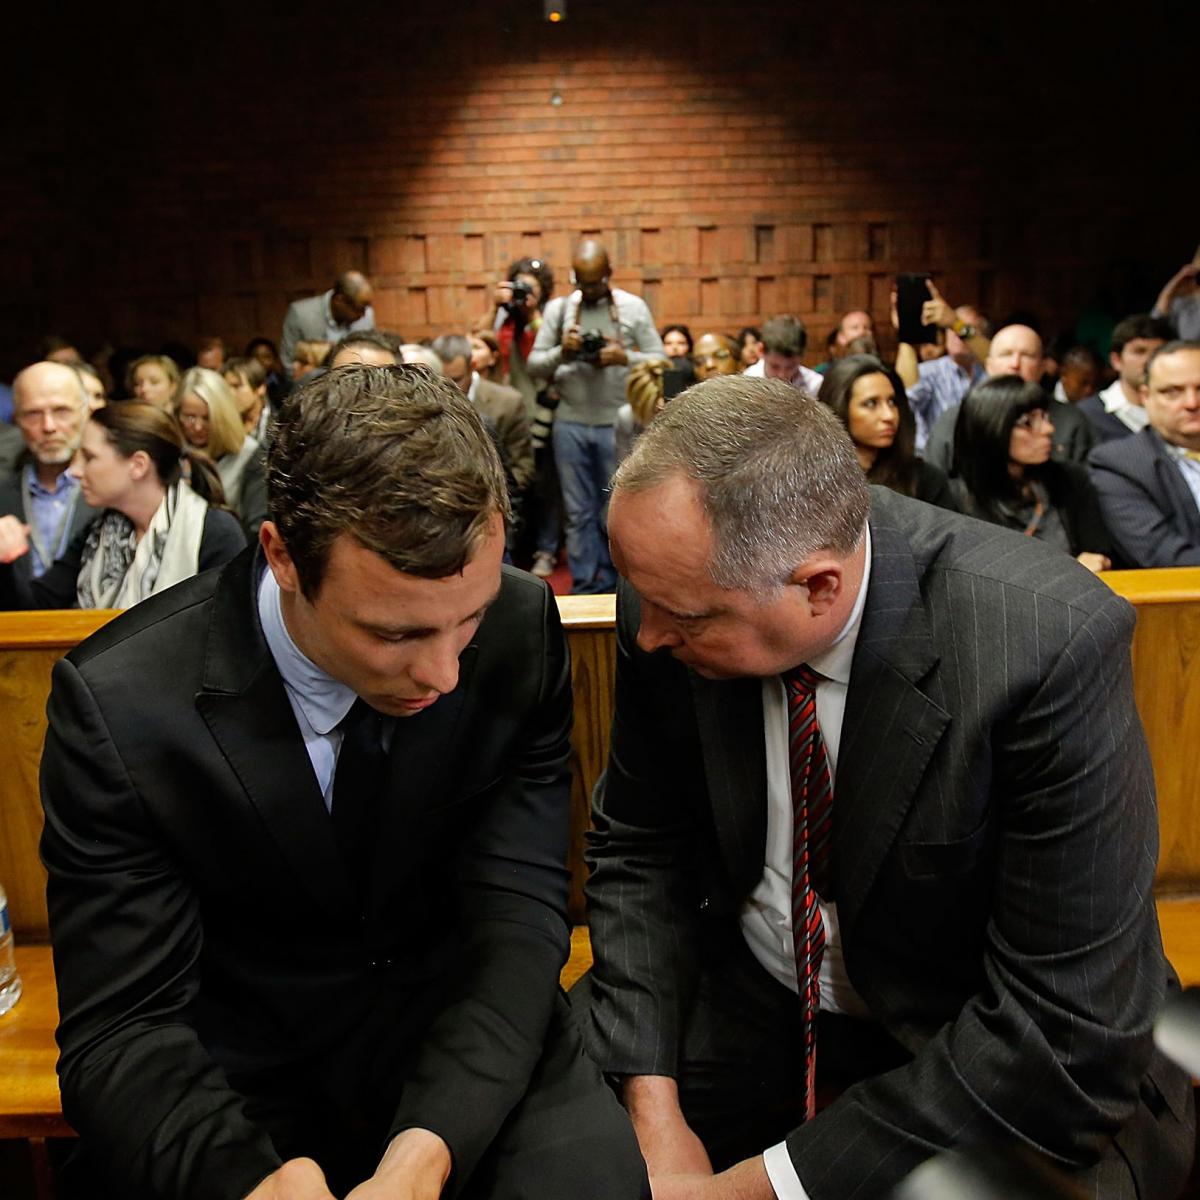 Oscar Pistorius Trial: Live Stream and Latest Updates from Reeva Steenkamp Case